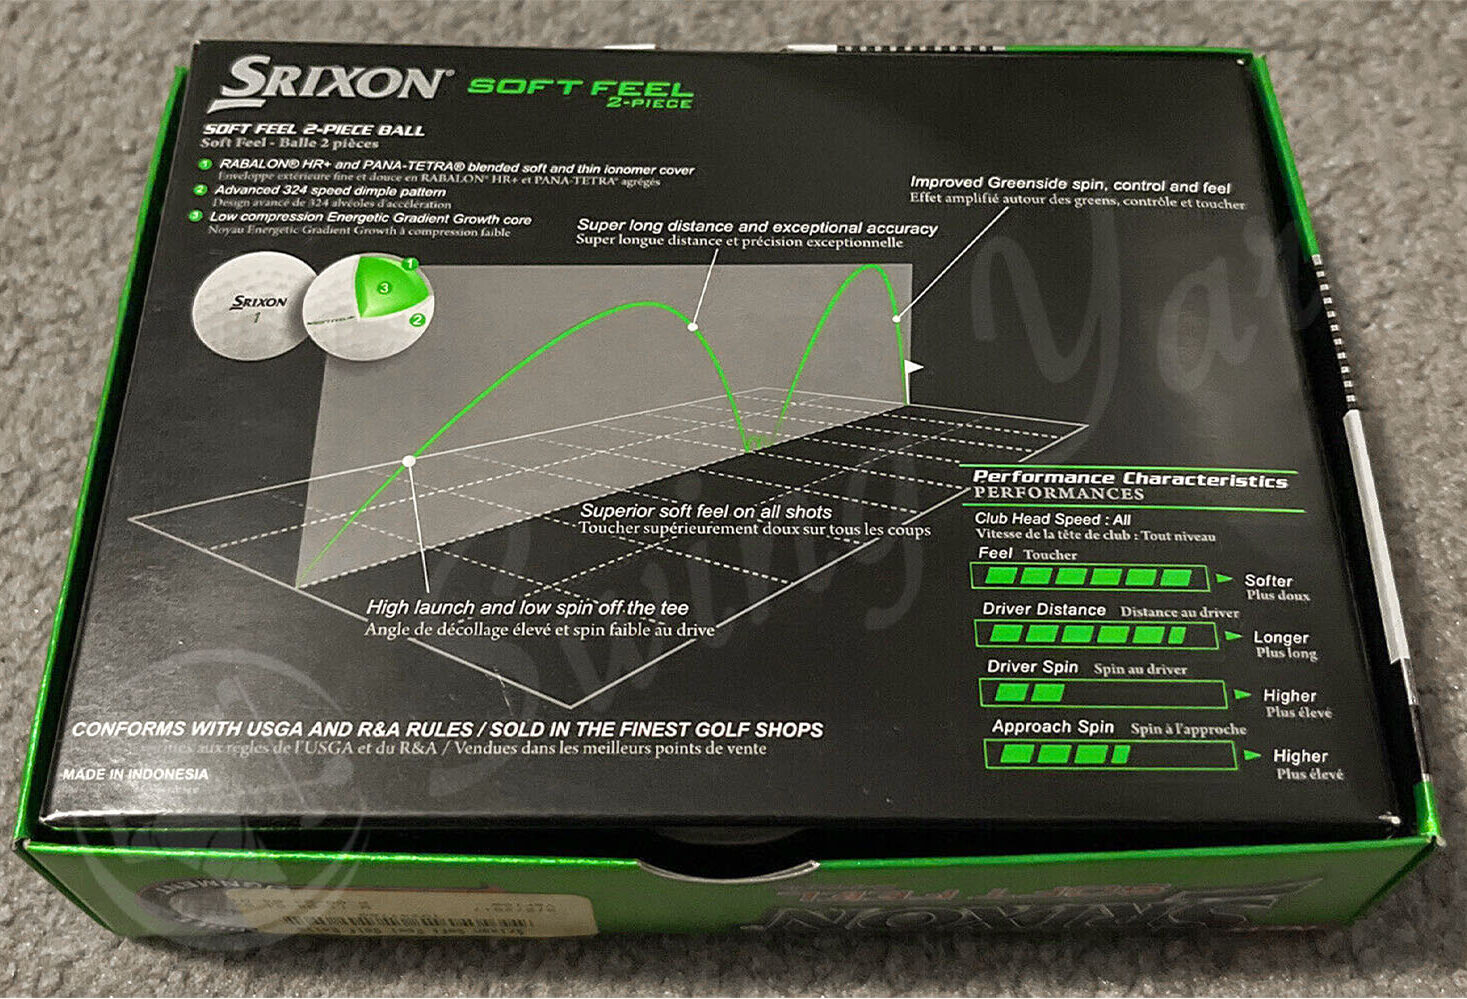 A product description of Srixon Soft Feel box